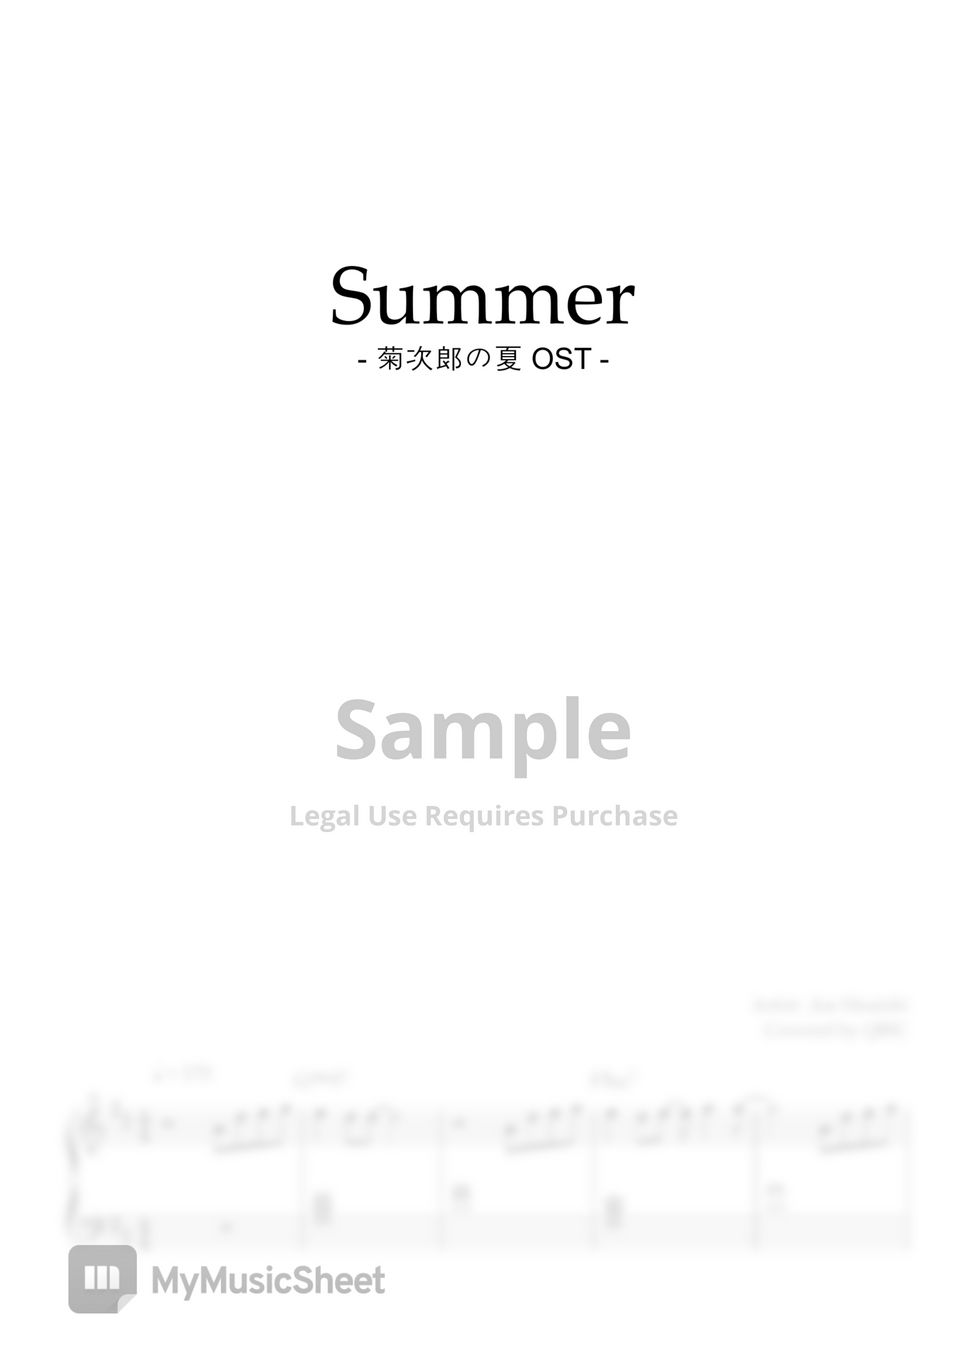 Joe Hisaishi - Summer by QBIC